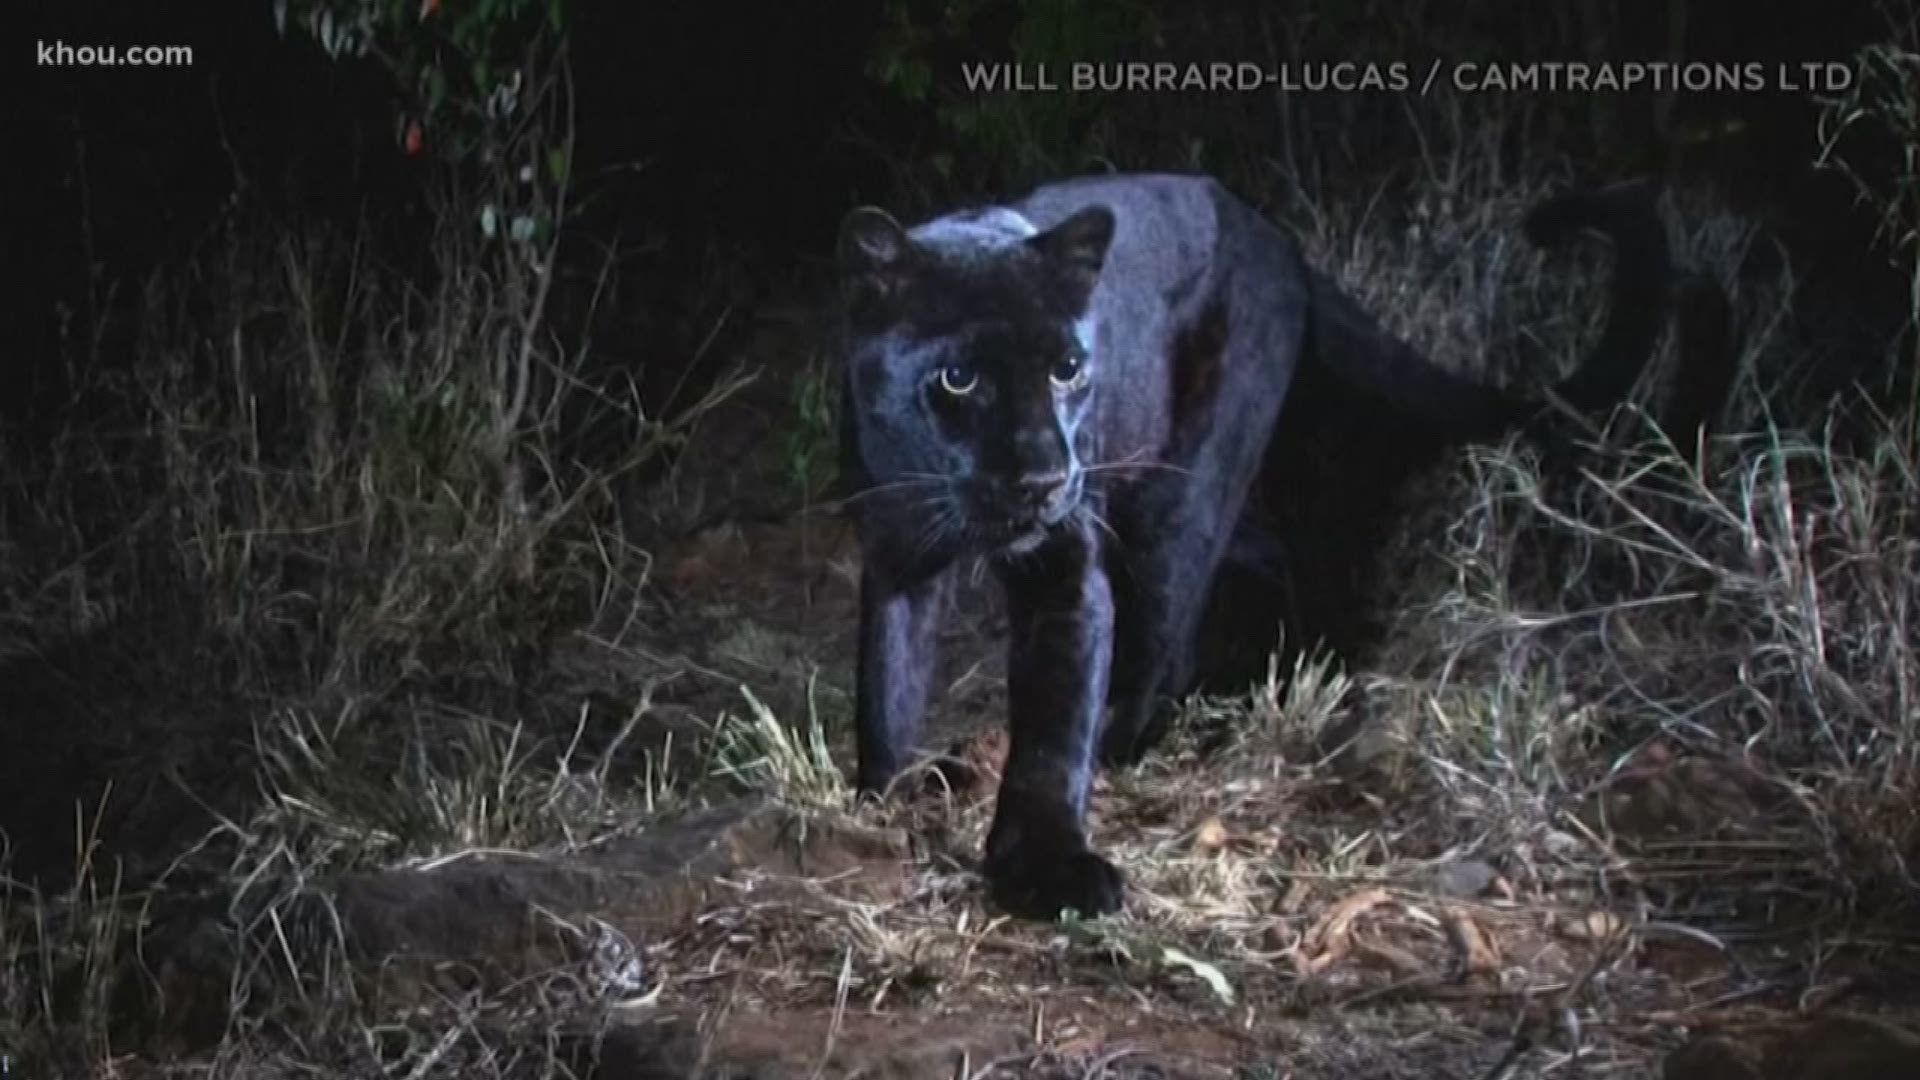 Remote cameras in Kenya captured photos of rare black leopards.